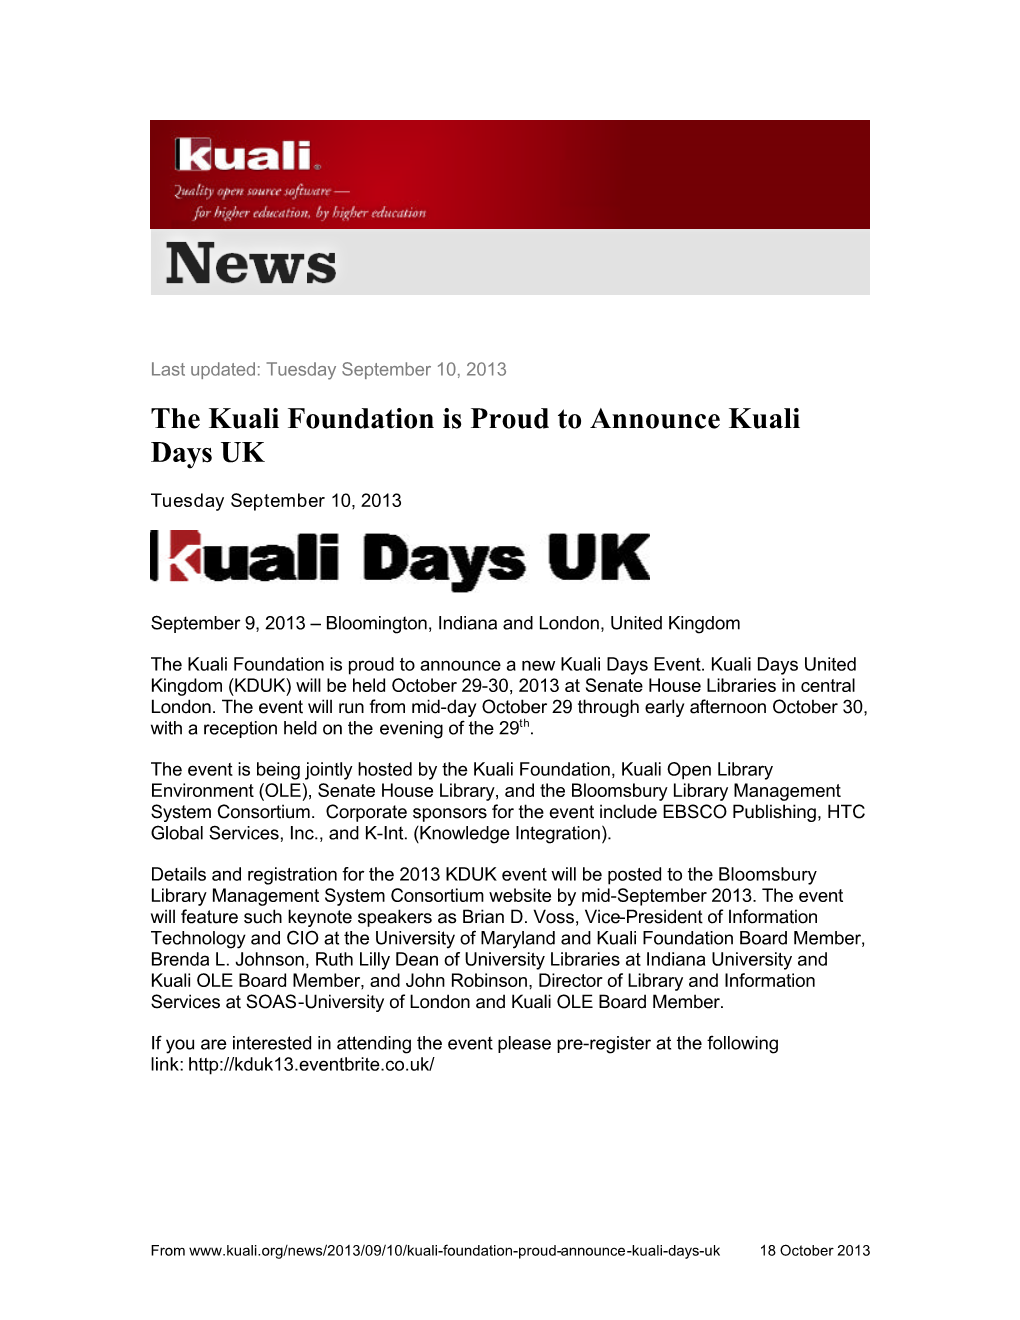 The Kuali Foundation Is Proud to Announce Kuali Days UK